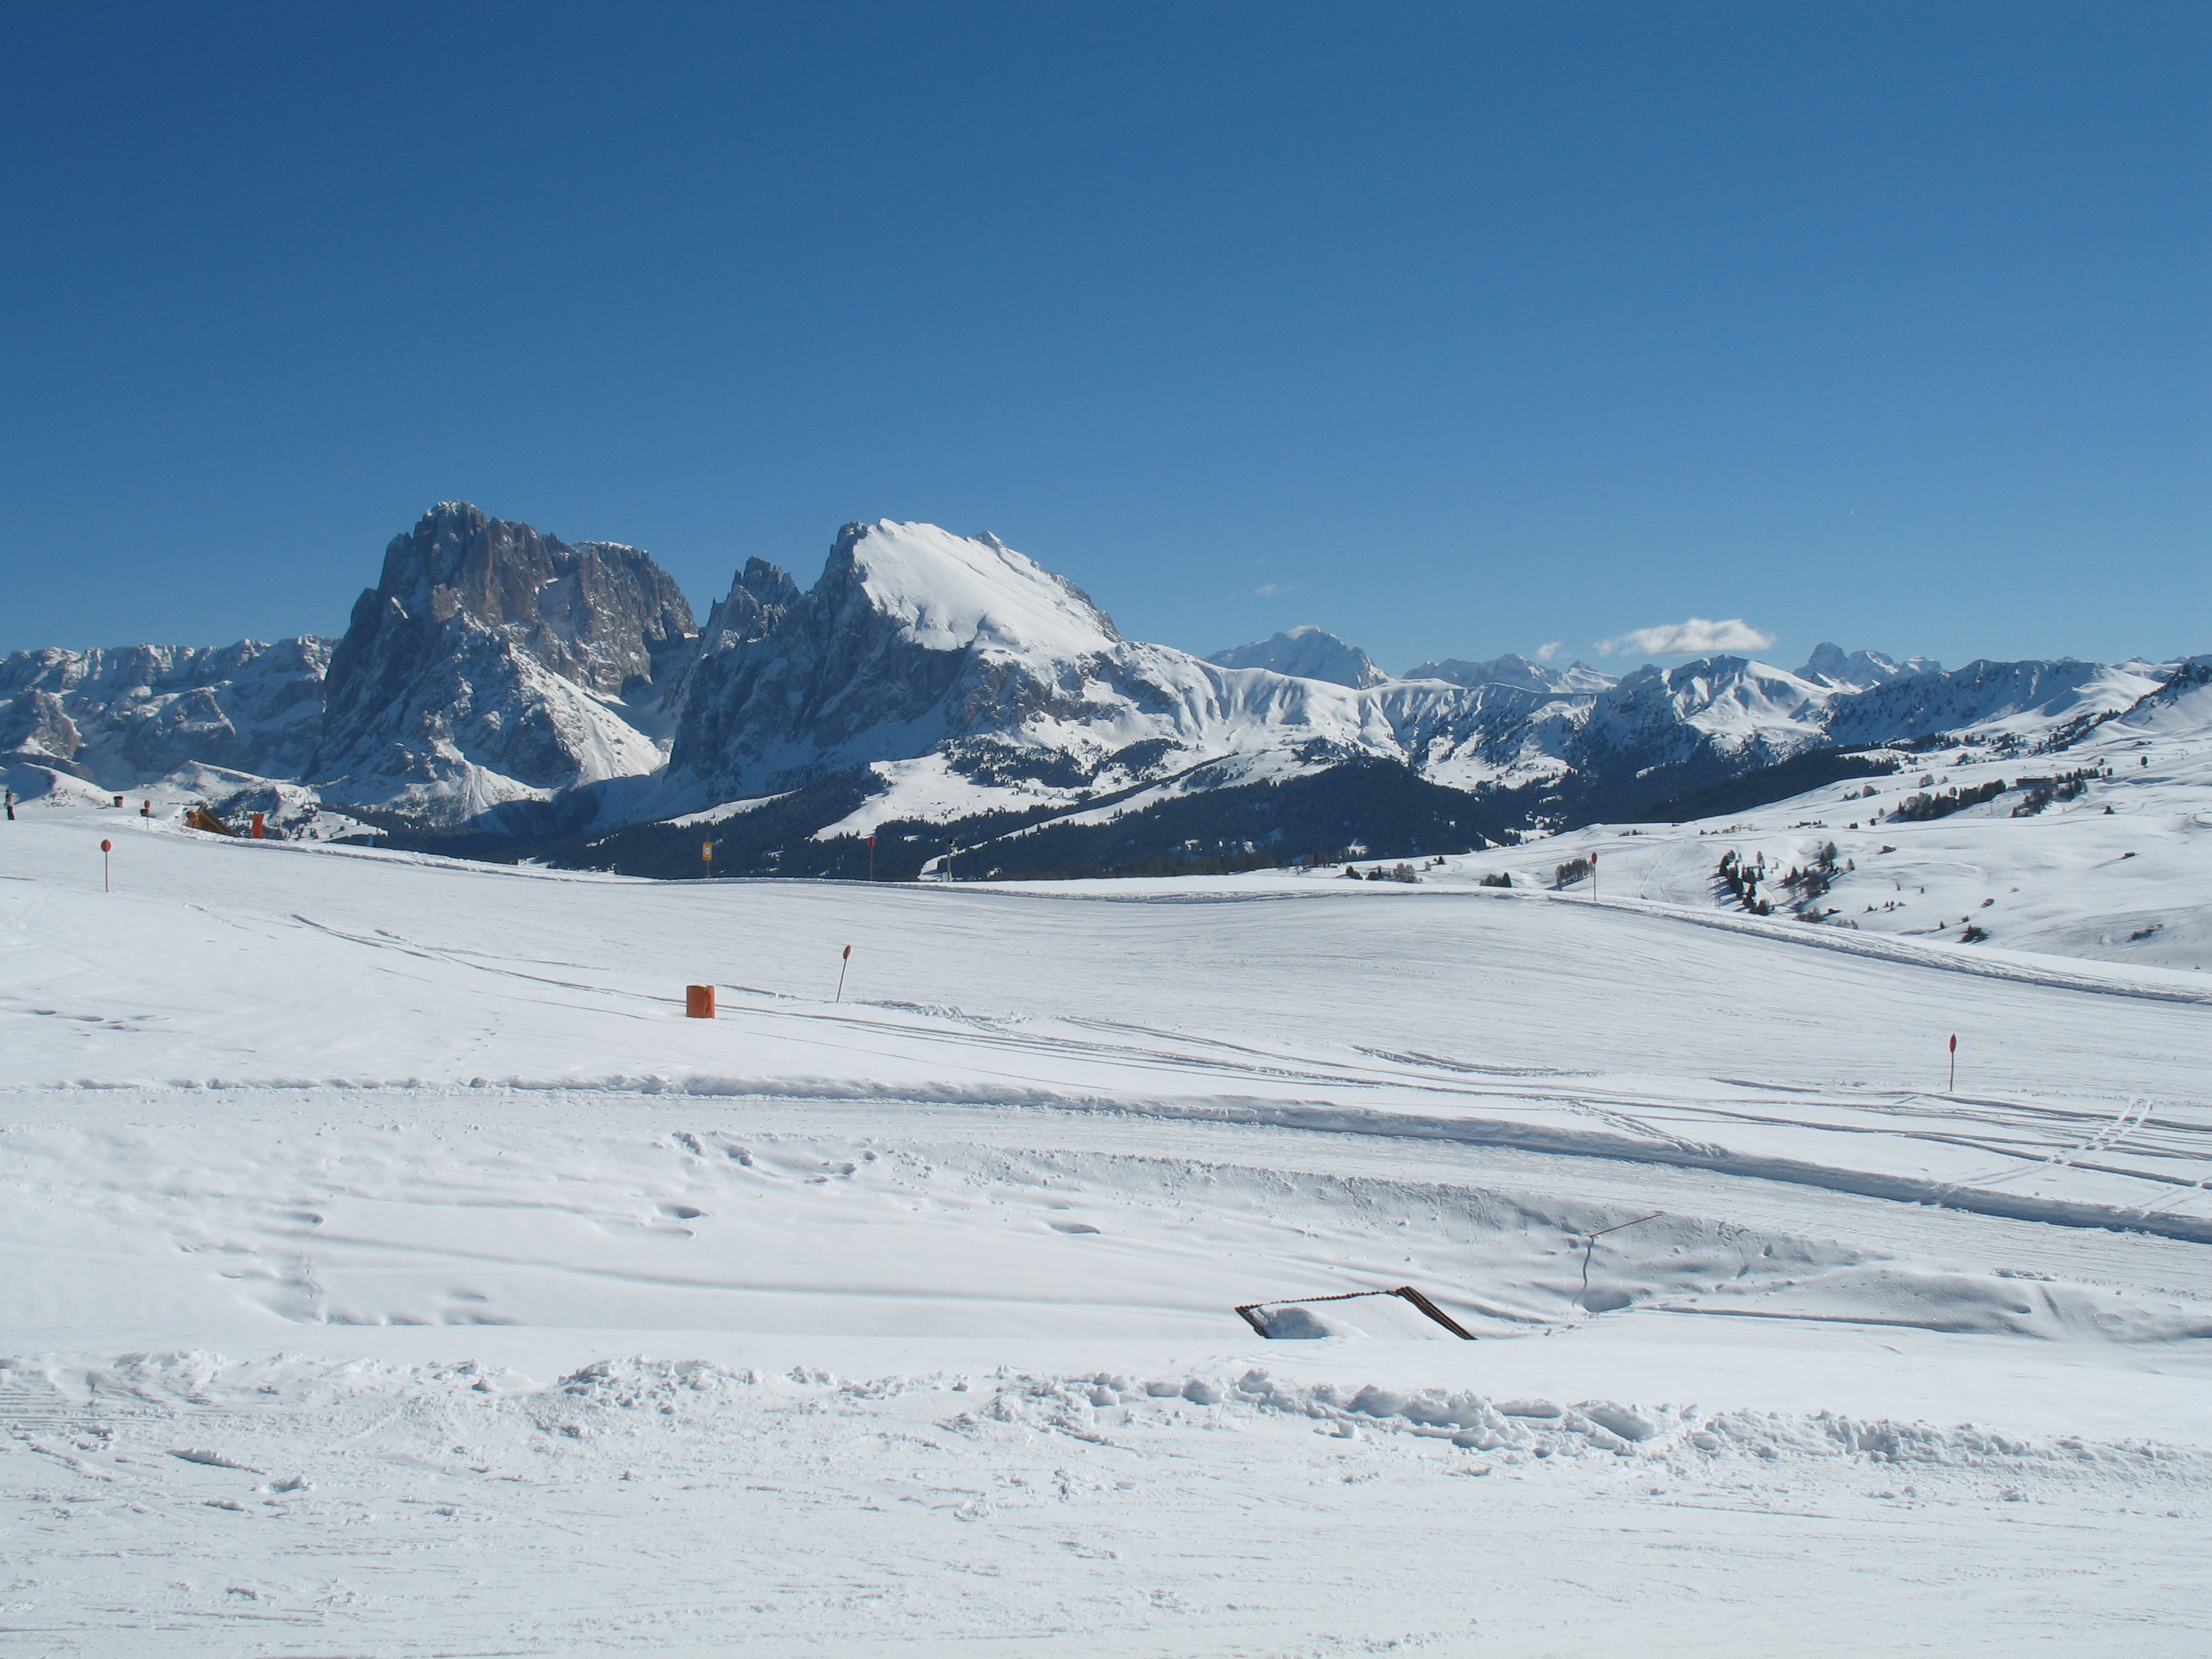 Ski tracks. Ортизей Италия горнолыжный курорт. Ортизеи Италия горнолыжный курорт. Намороженный лед Ортизей. Ski track.